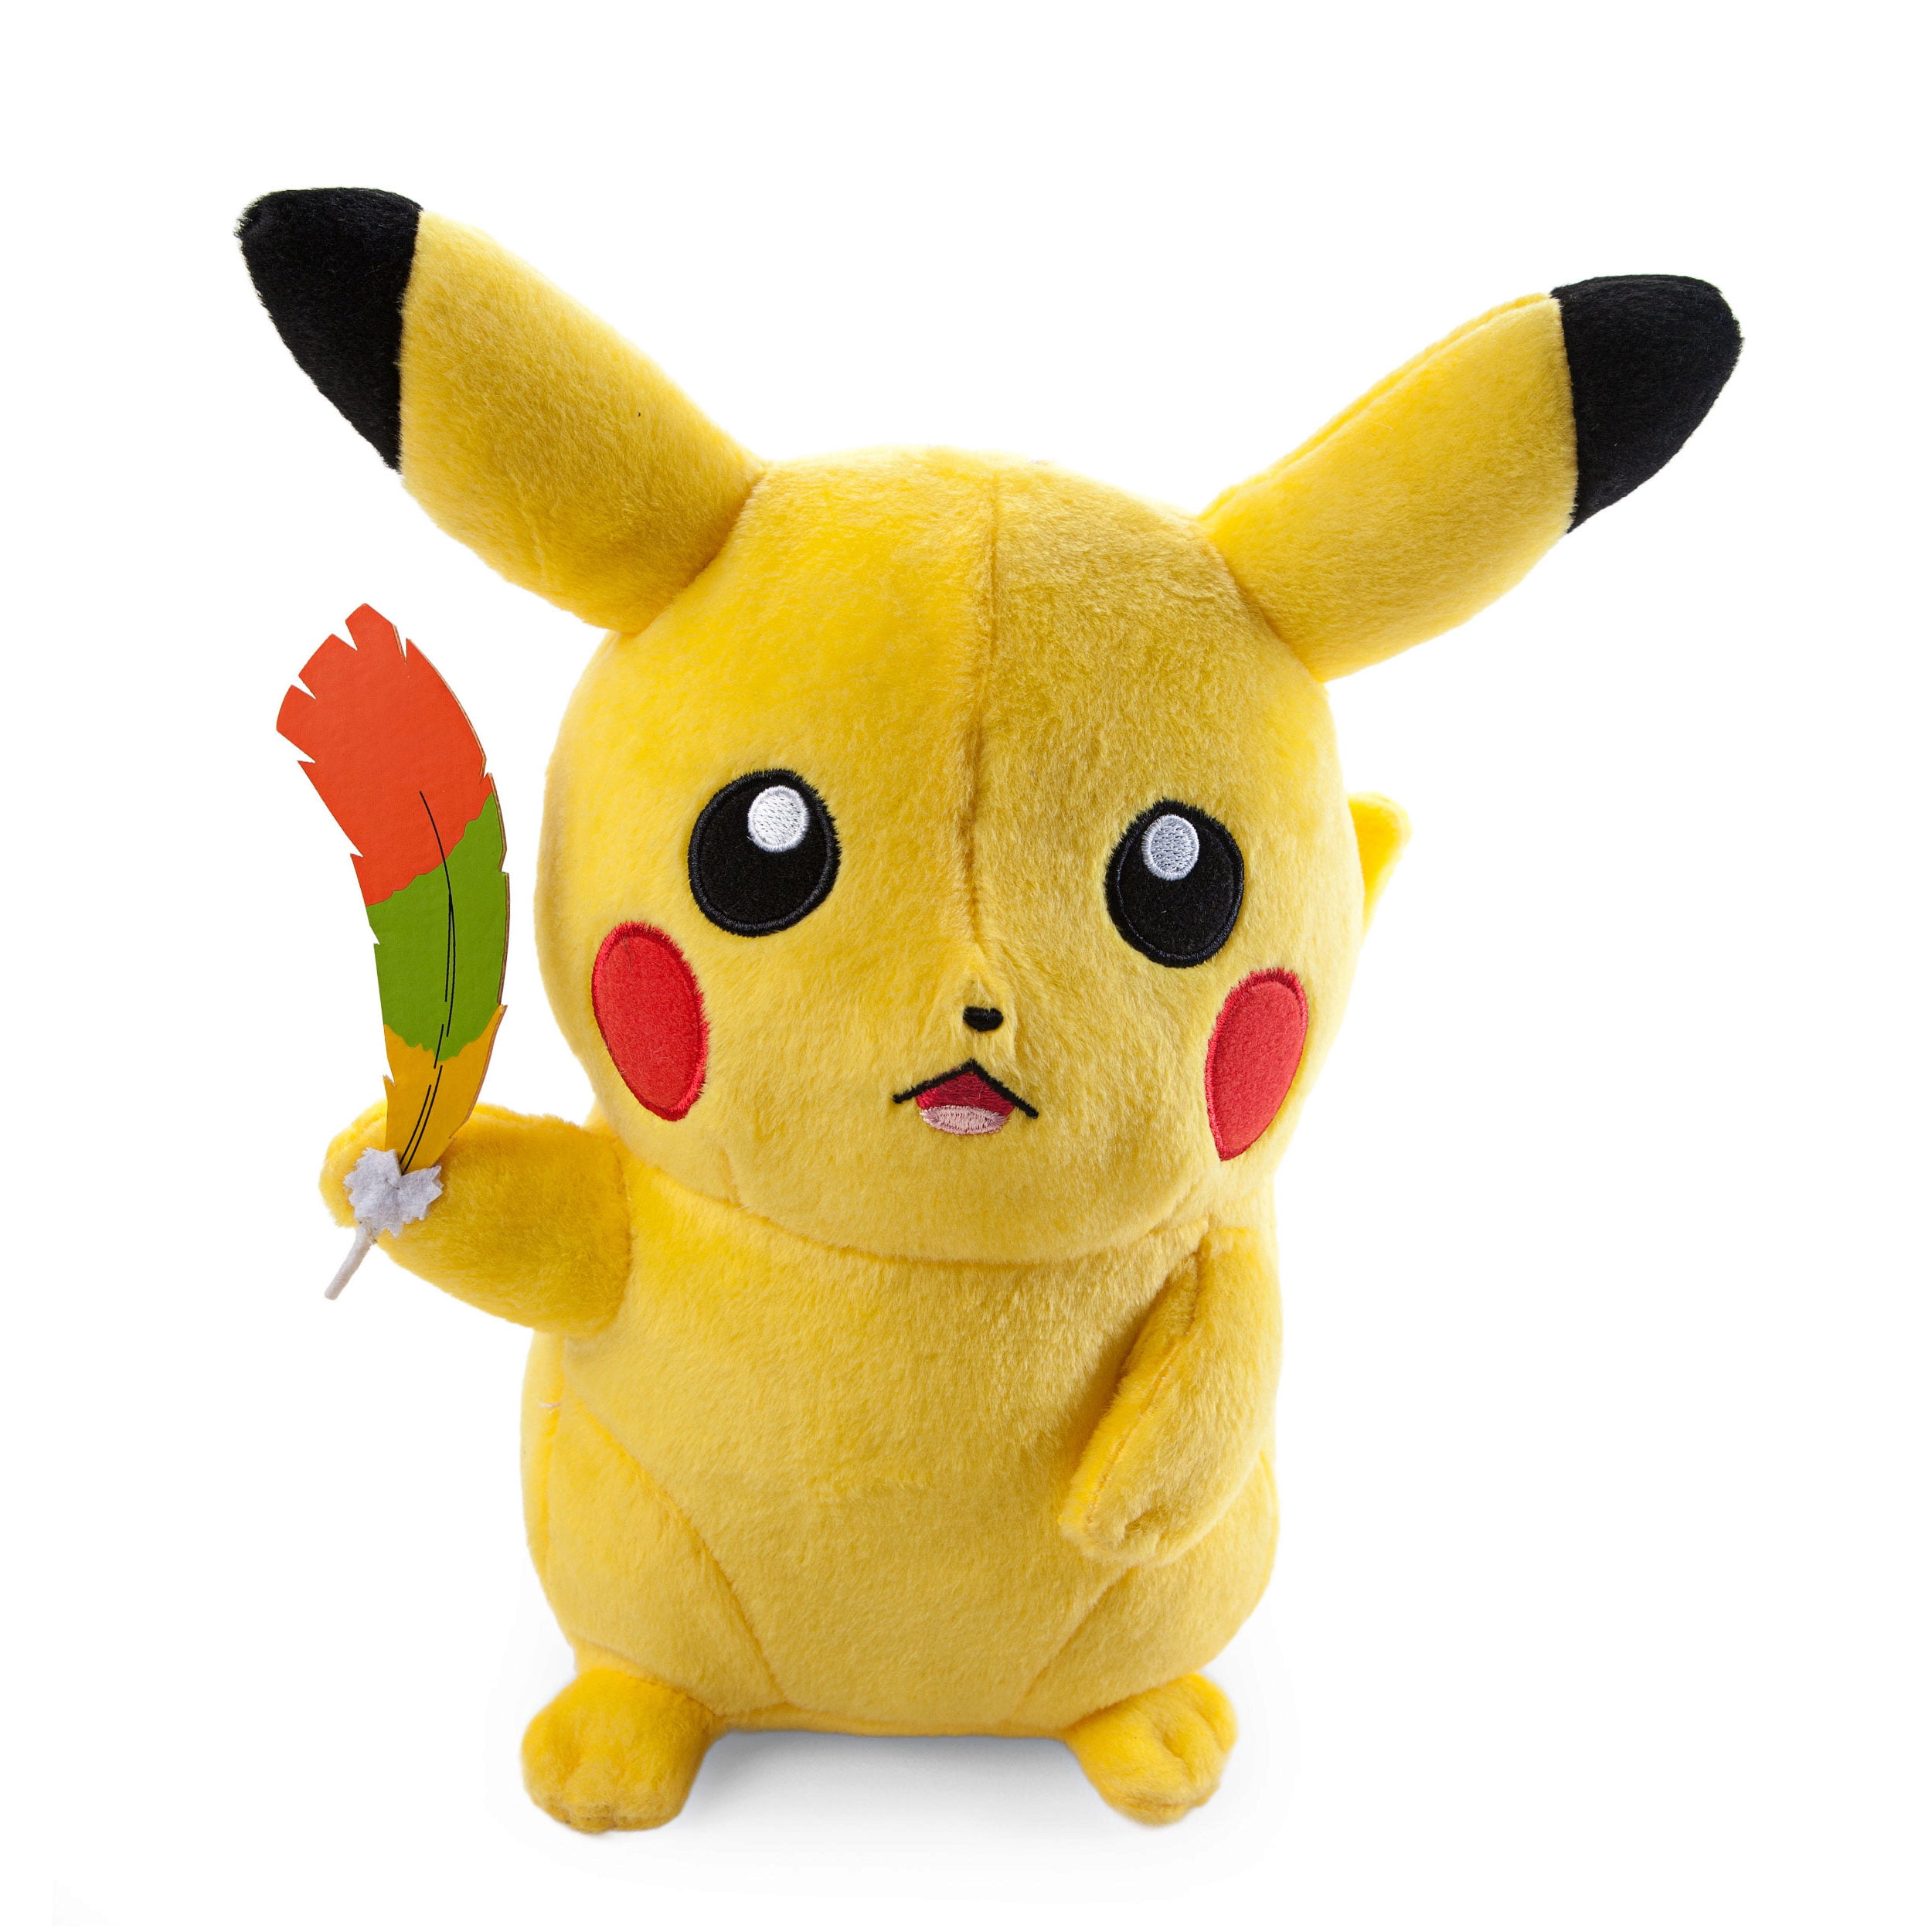 I Choose You Pokemon the Movie Pikachu 10 inch Plush Toy 